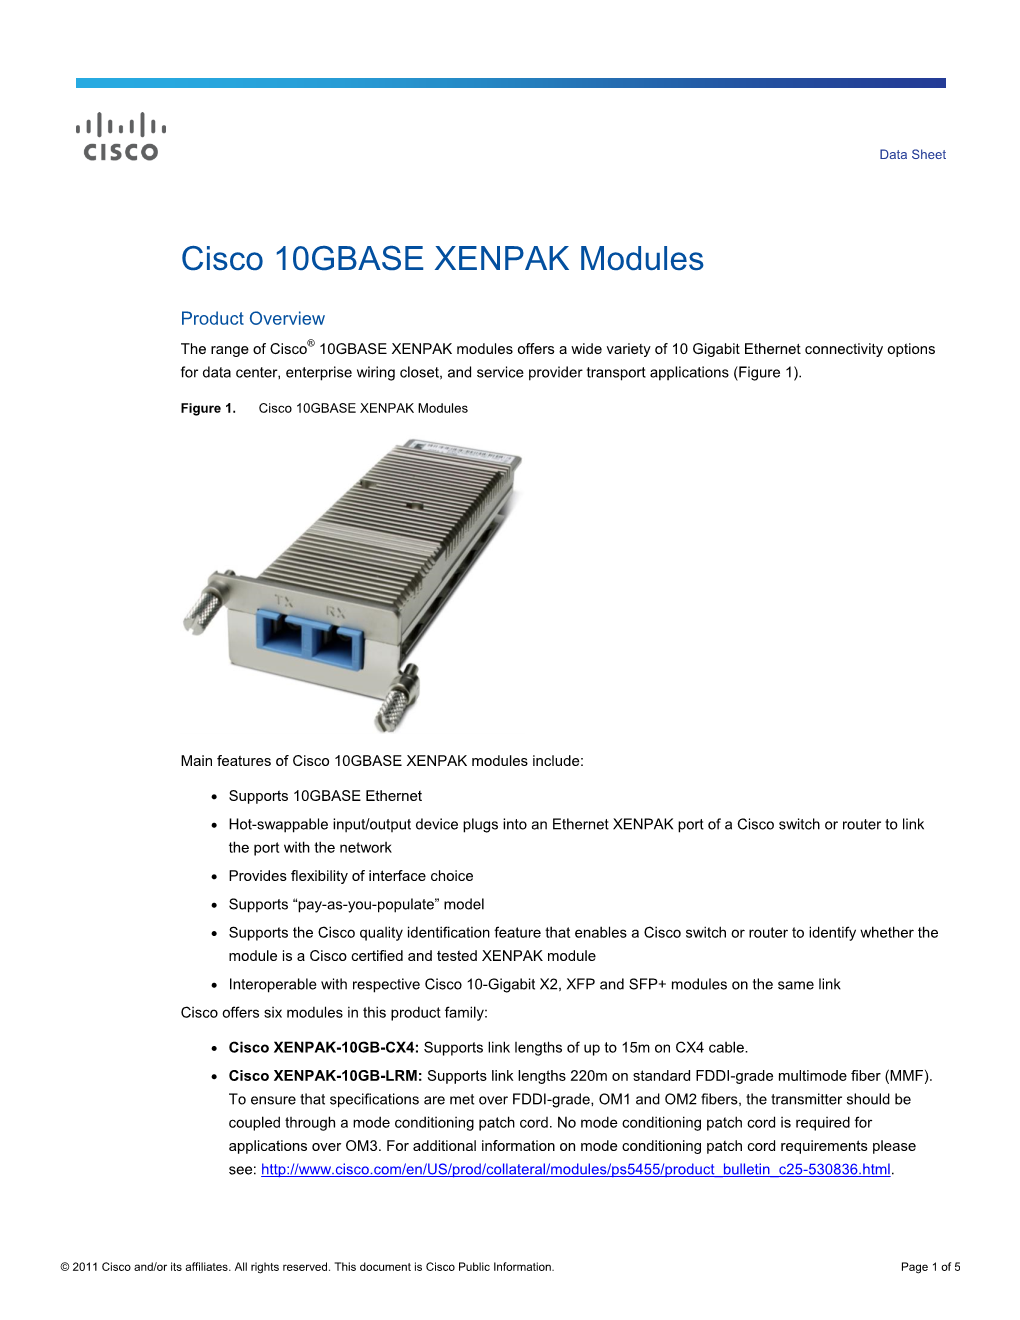 Cisco 10GBASE XENPAK Modules